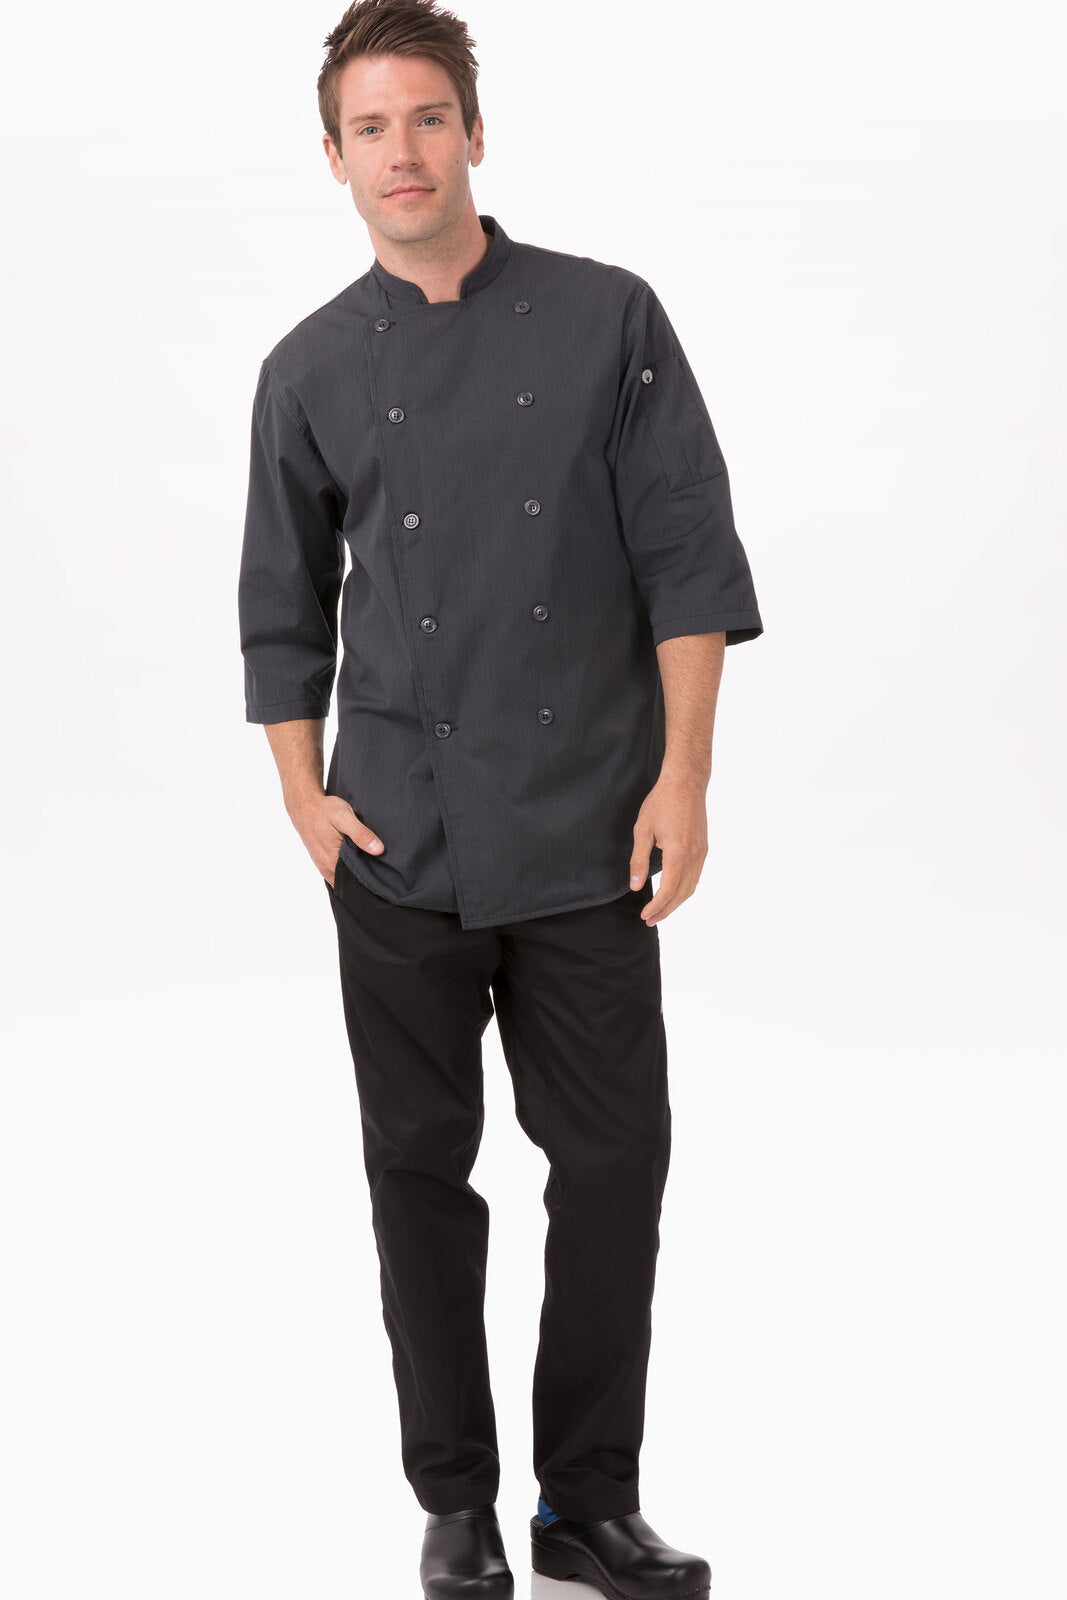 Chef Works - Brighton Chef Jacket